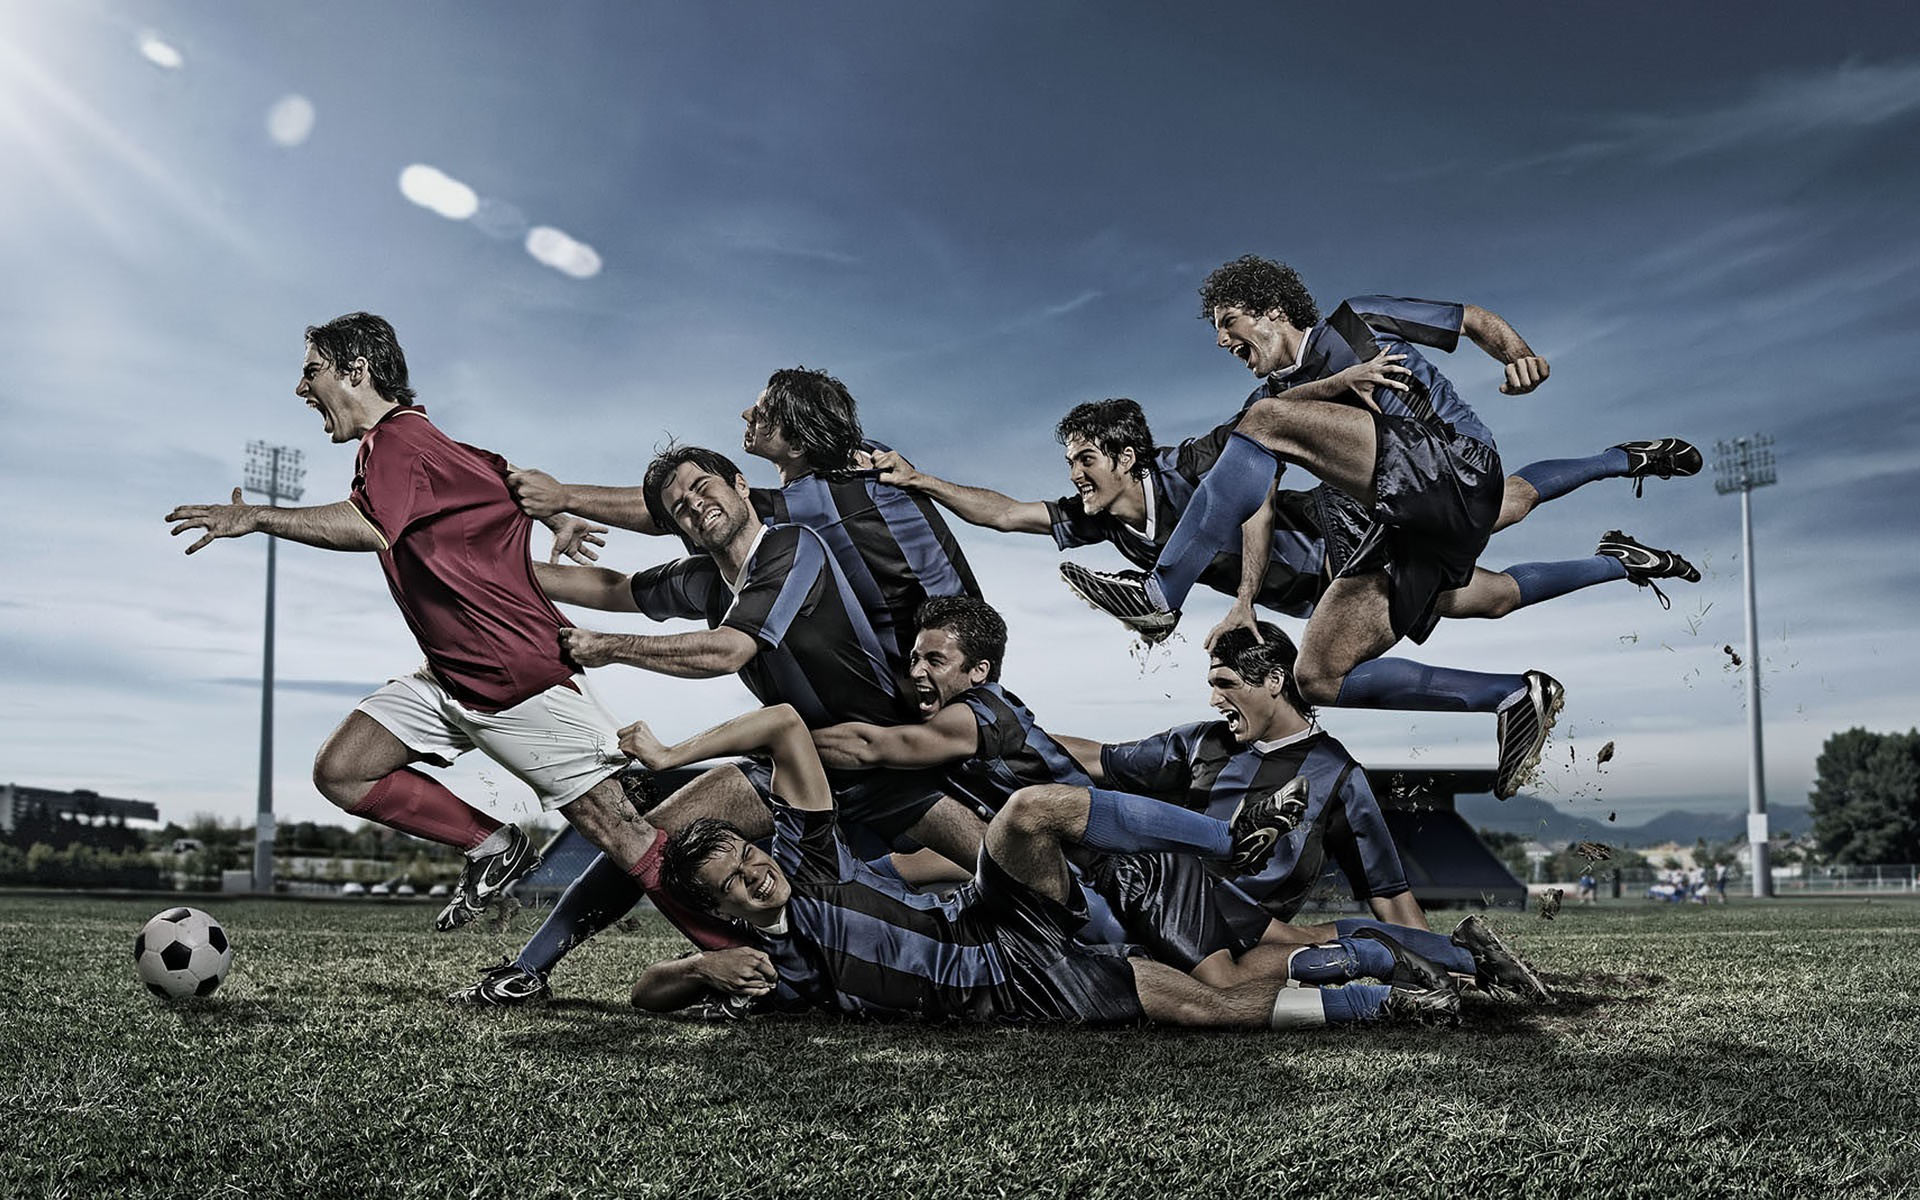 1080p Wallpaper Soccer: Football Wallpaper Full Hd Graphic 1920x1200px